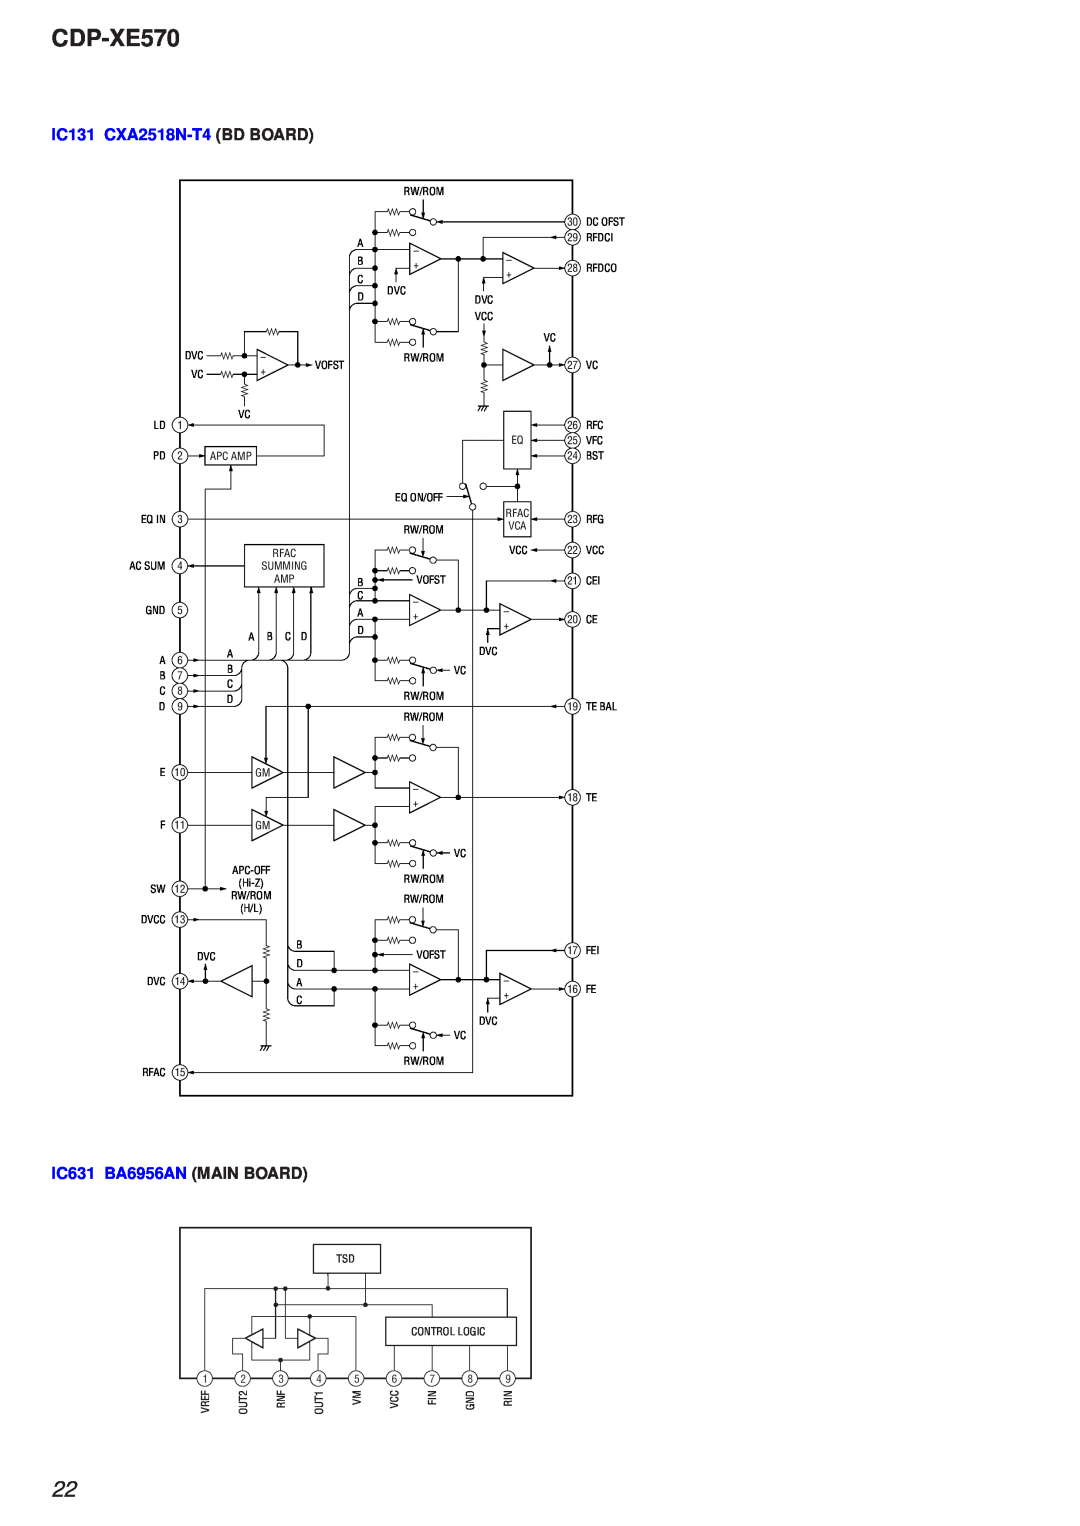 Sony Ericsson CDP-XE570 specifications IC131 CXA2518N-T4 BD BOARD, IC631 BA6956AN MAIN BOARD 